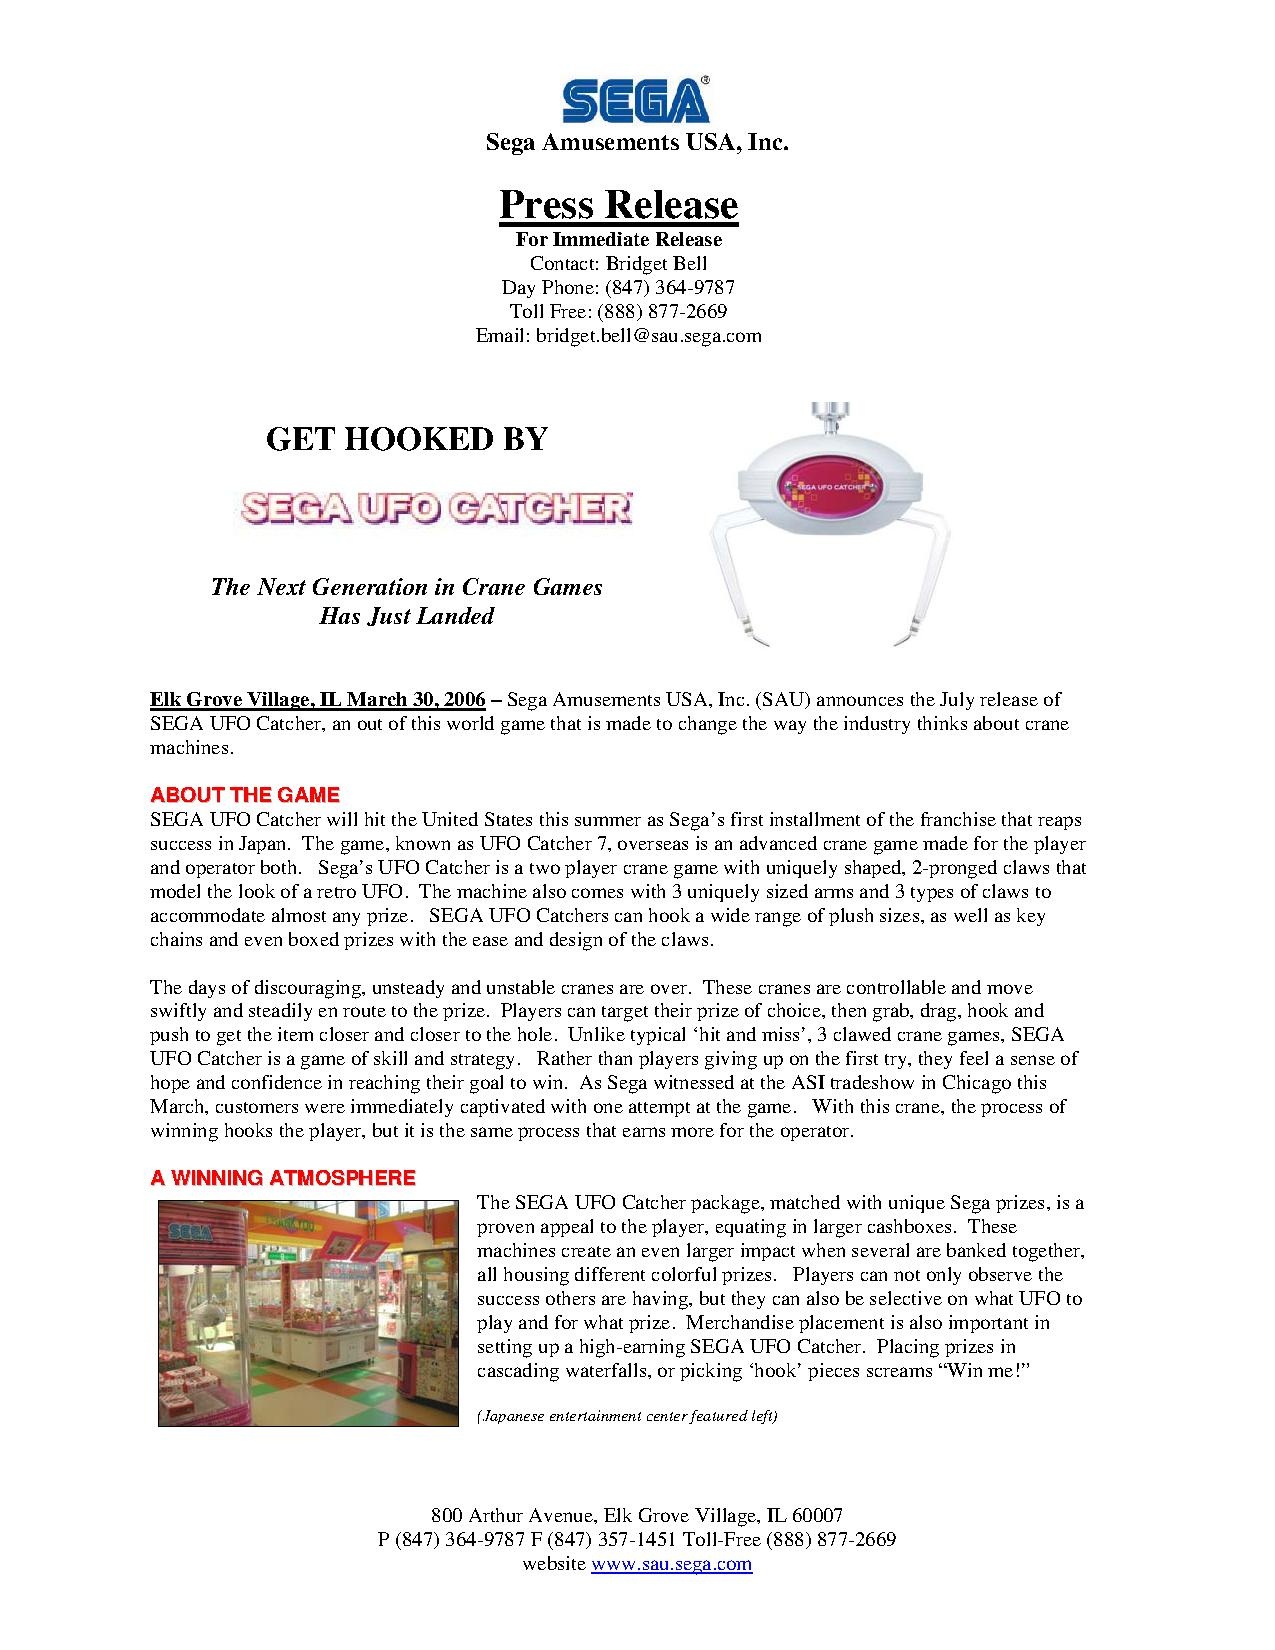 PressRelease 2006-03-30 UFOCatcher.pdf